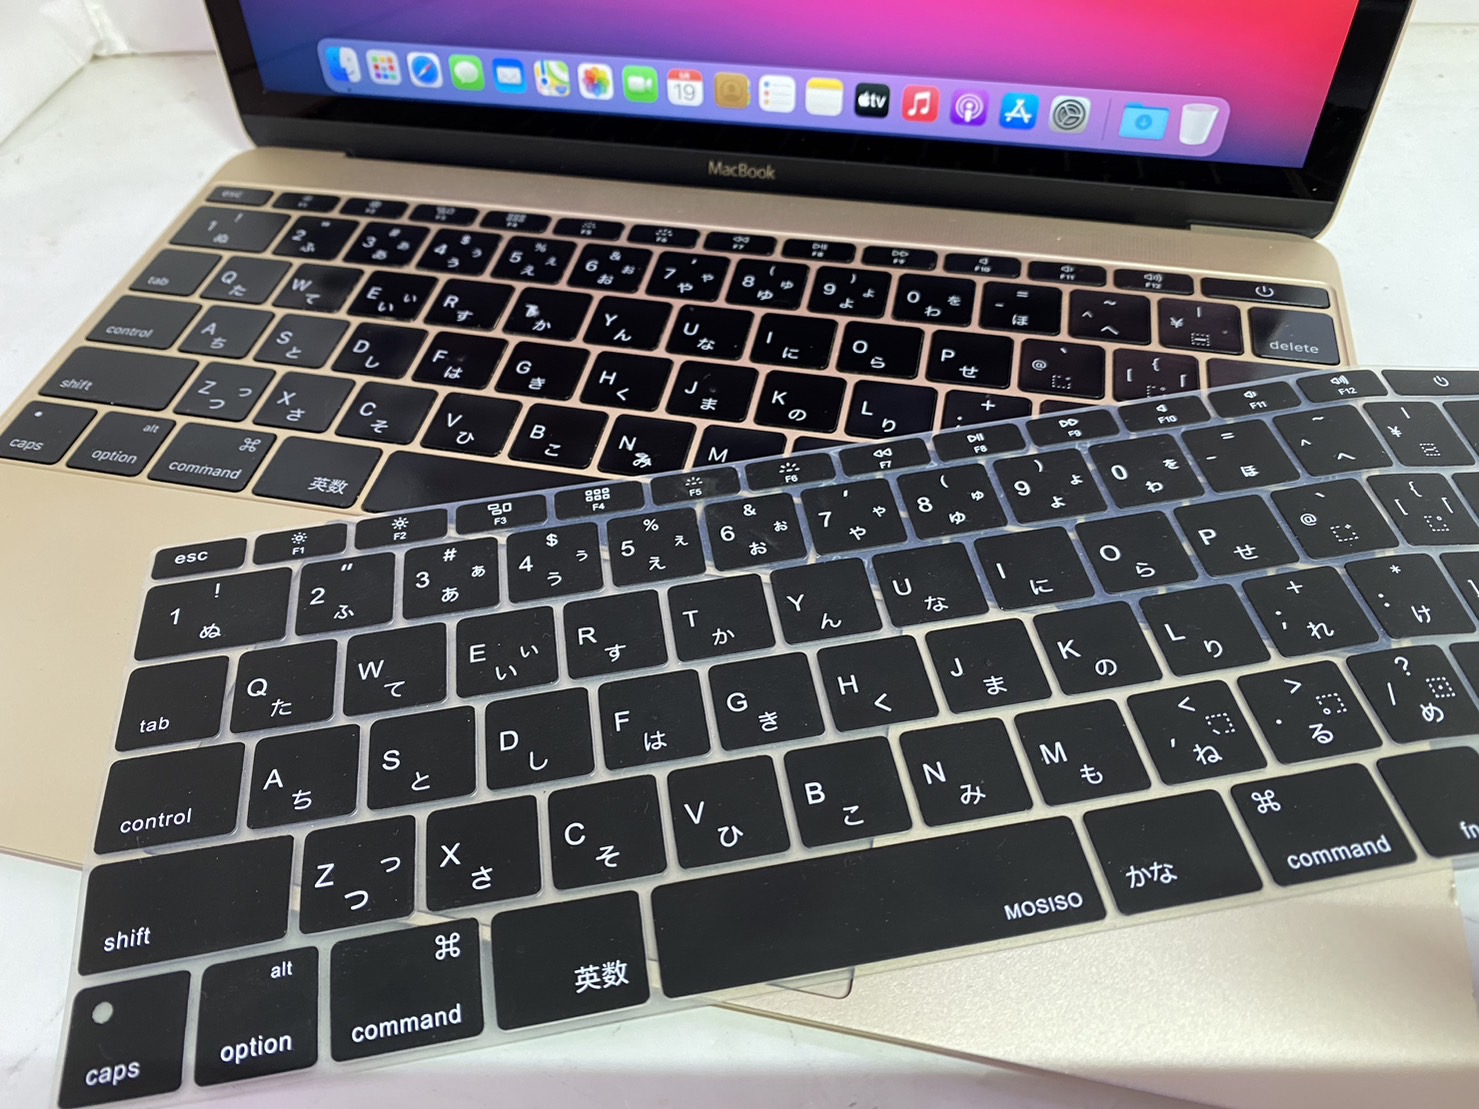 APPLE(アップル) MacBook (Retina, 12-inch, Early 2015) A1534の激安